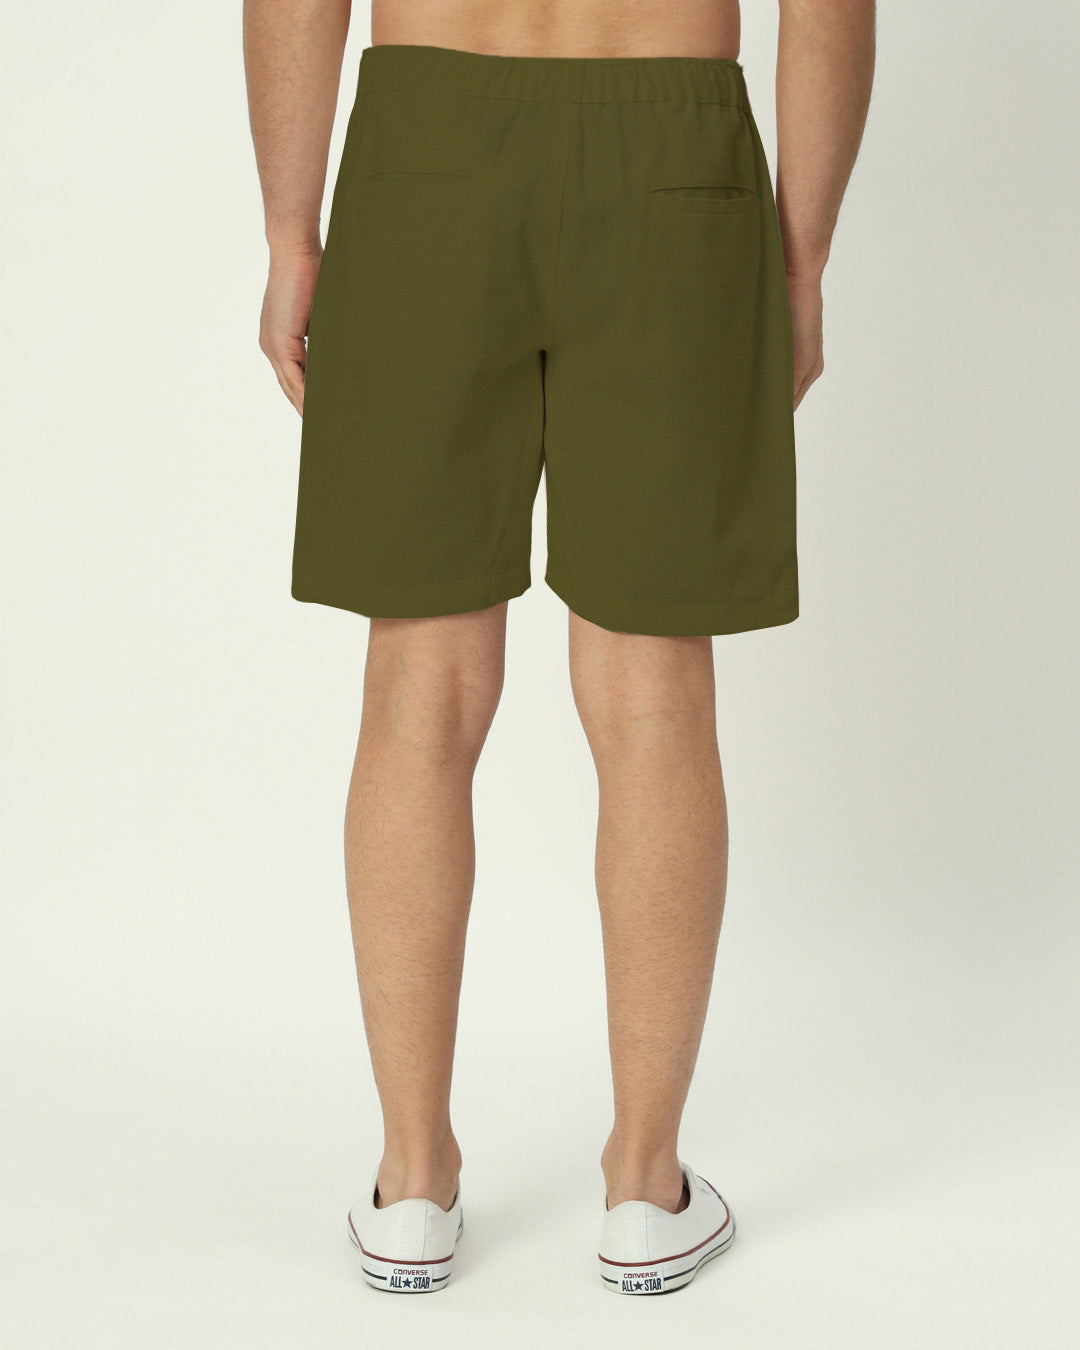 Comfortable City Dweller Olive Green Men's Shorts